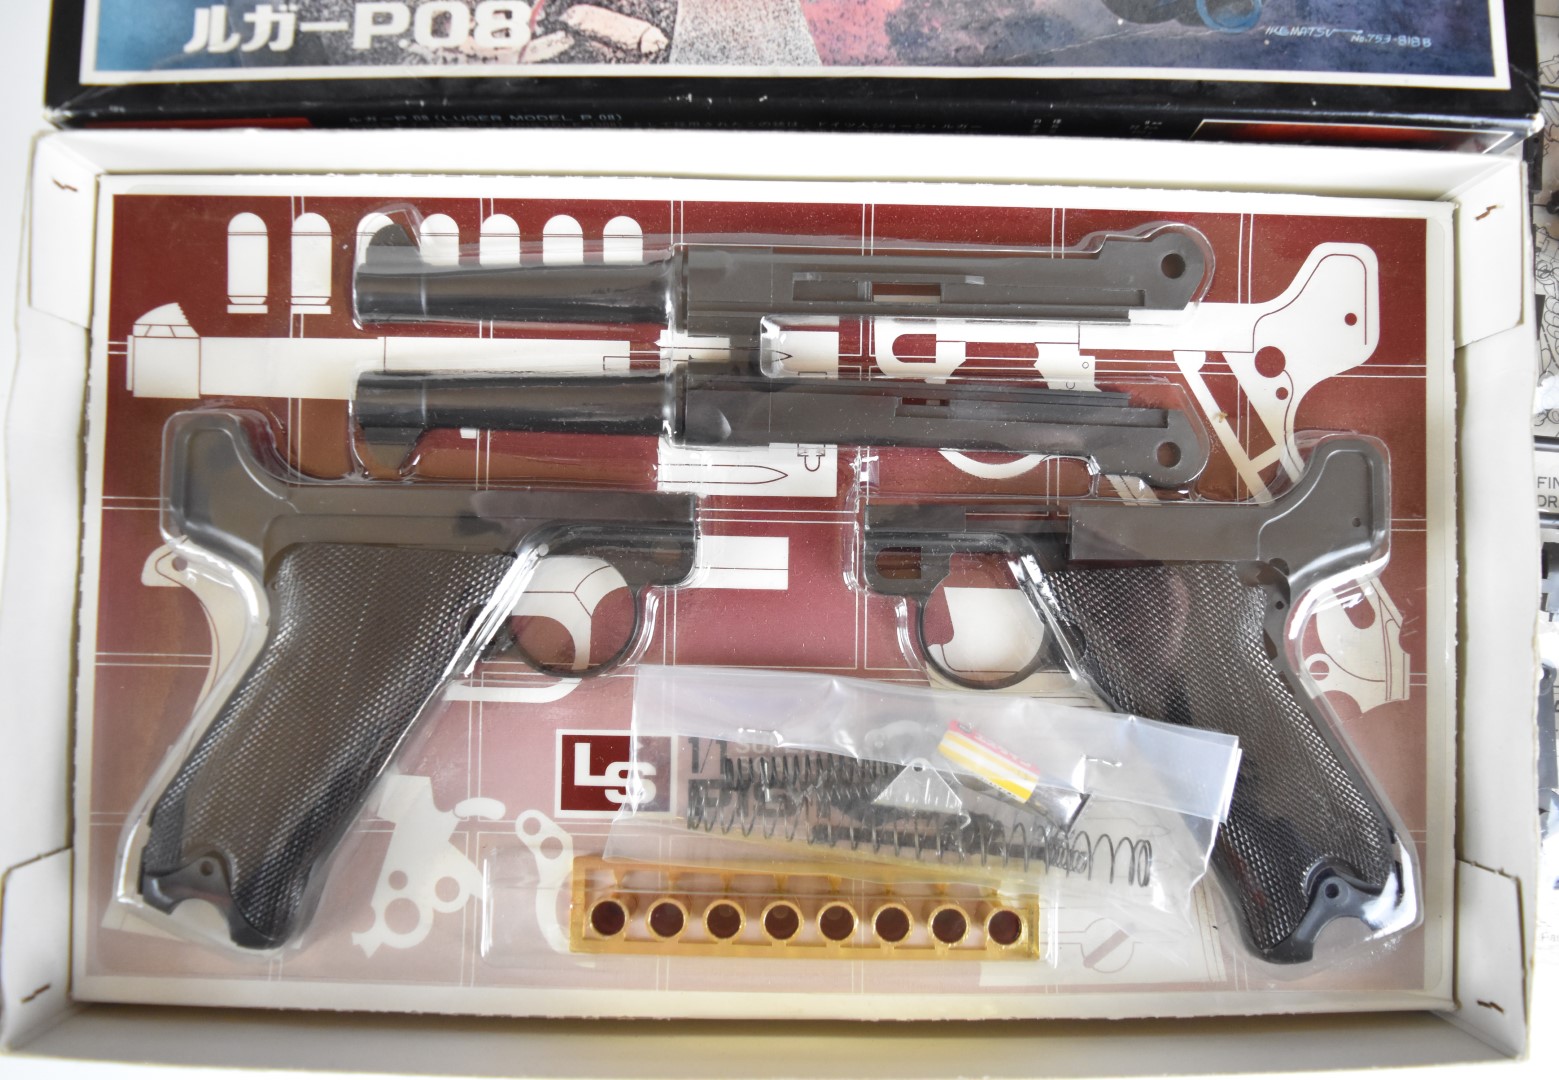 LS 1:1 scale Luger Parabellum Pistol Model M08 plastic model kit, in original box. - Image 2 of 4